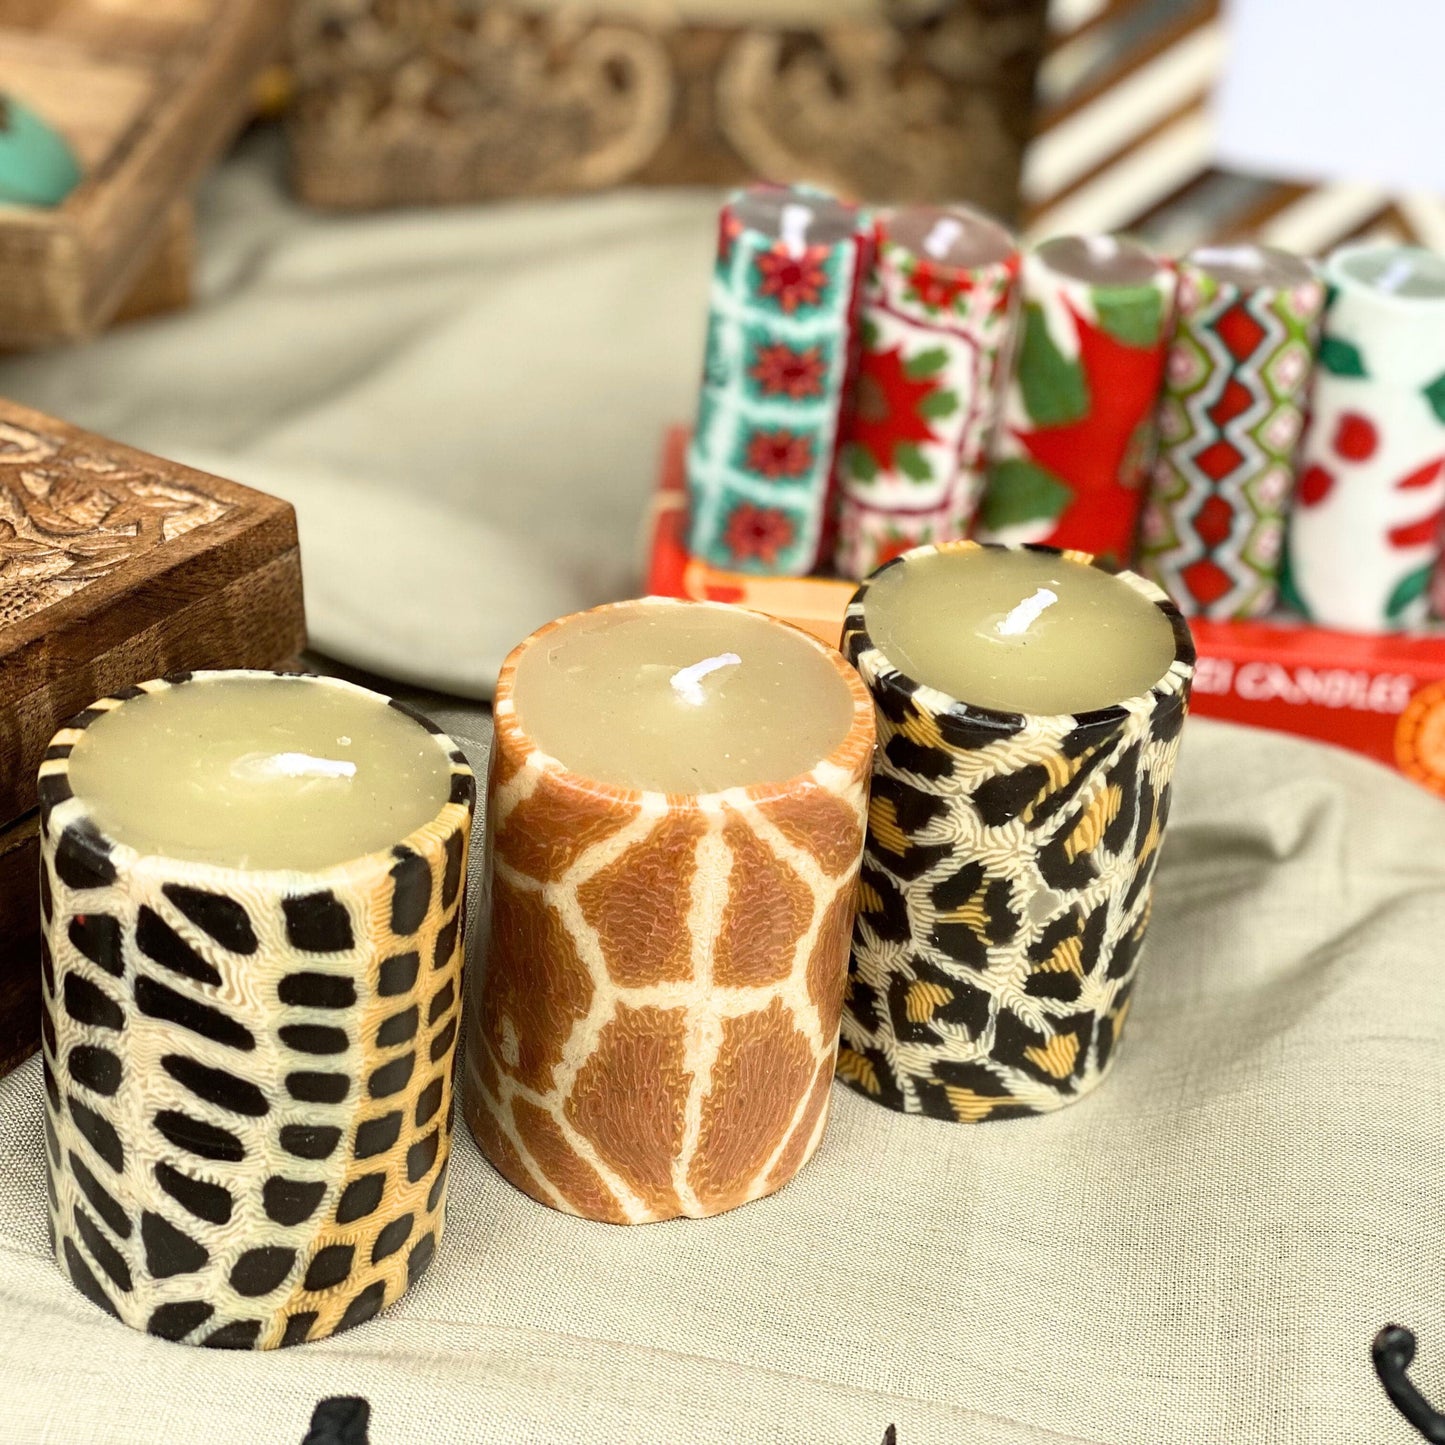 Animal Print Pillar Candles - Set of 3, Safari Jungle 7 cm, Fair Trade, Ethical - Aksa Home Decor 